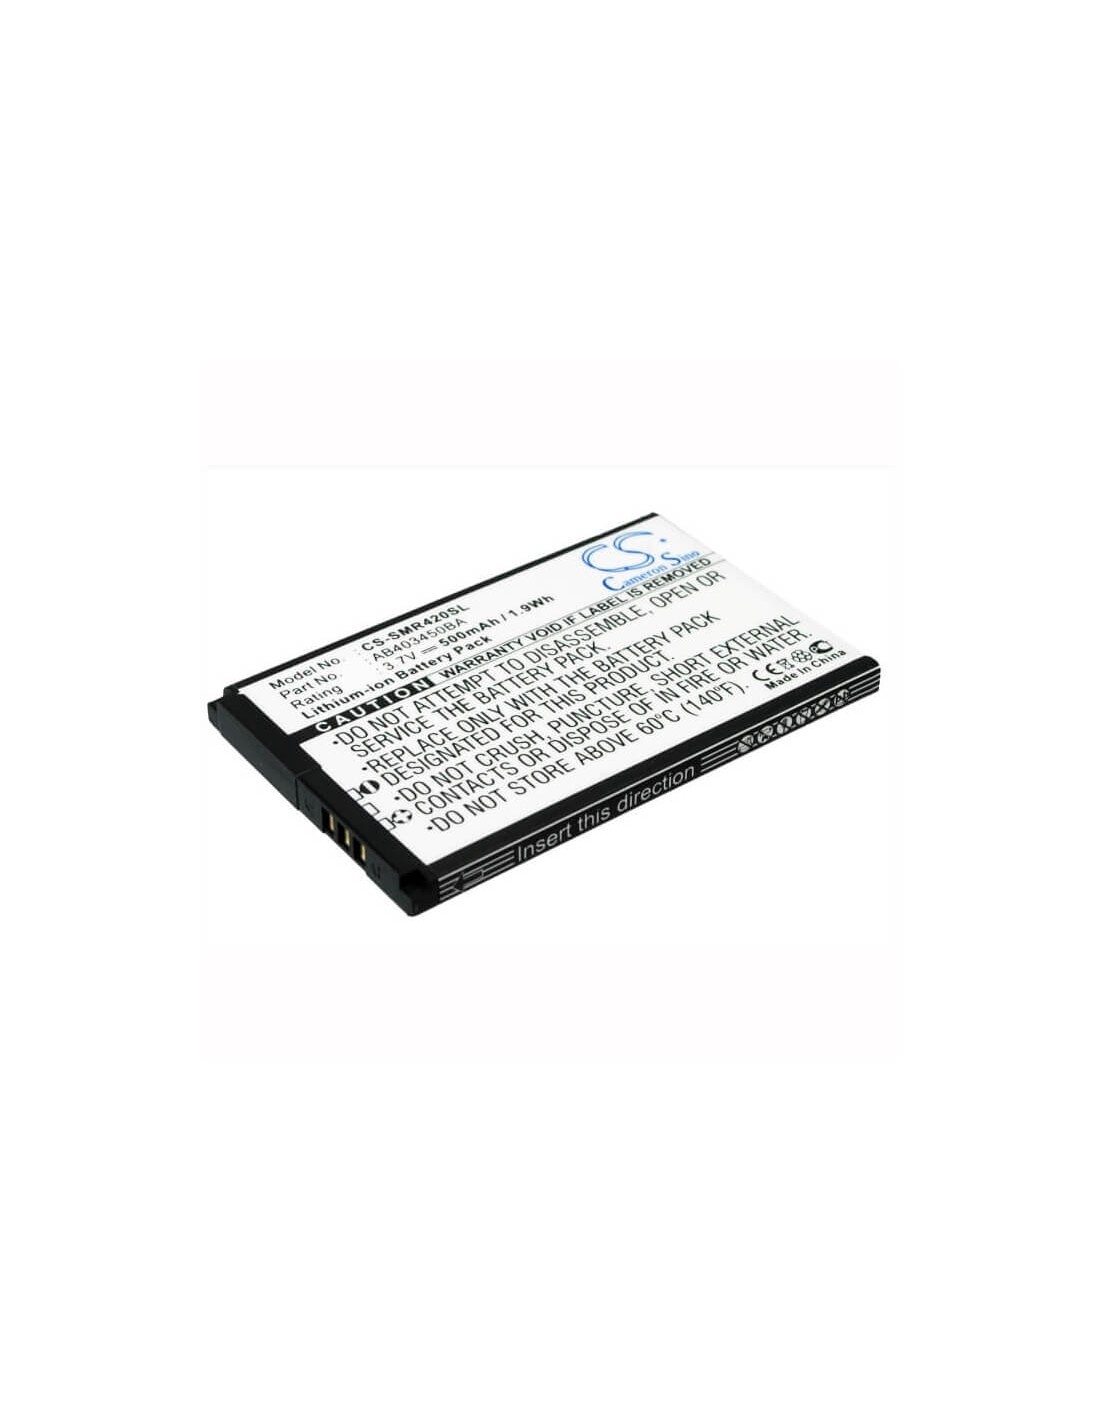 Battery for Samsung SCH-R200, SCH-R410, Tint R420 3.7V, 500mAh - 1.85Wh